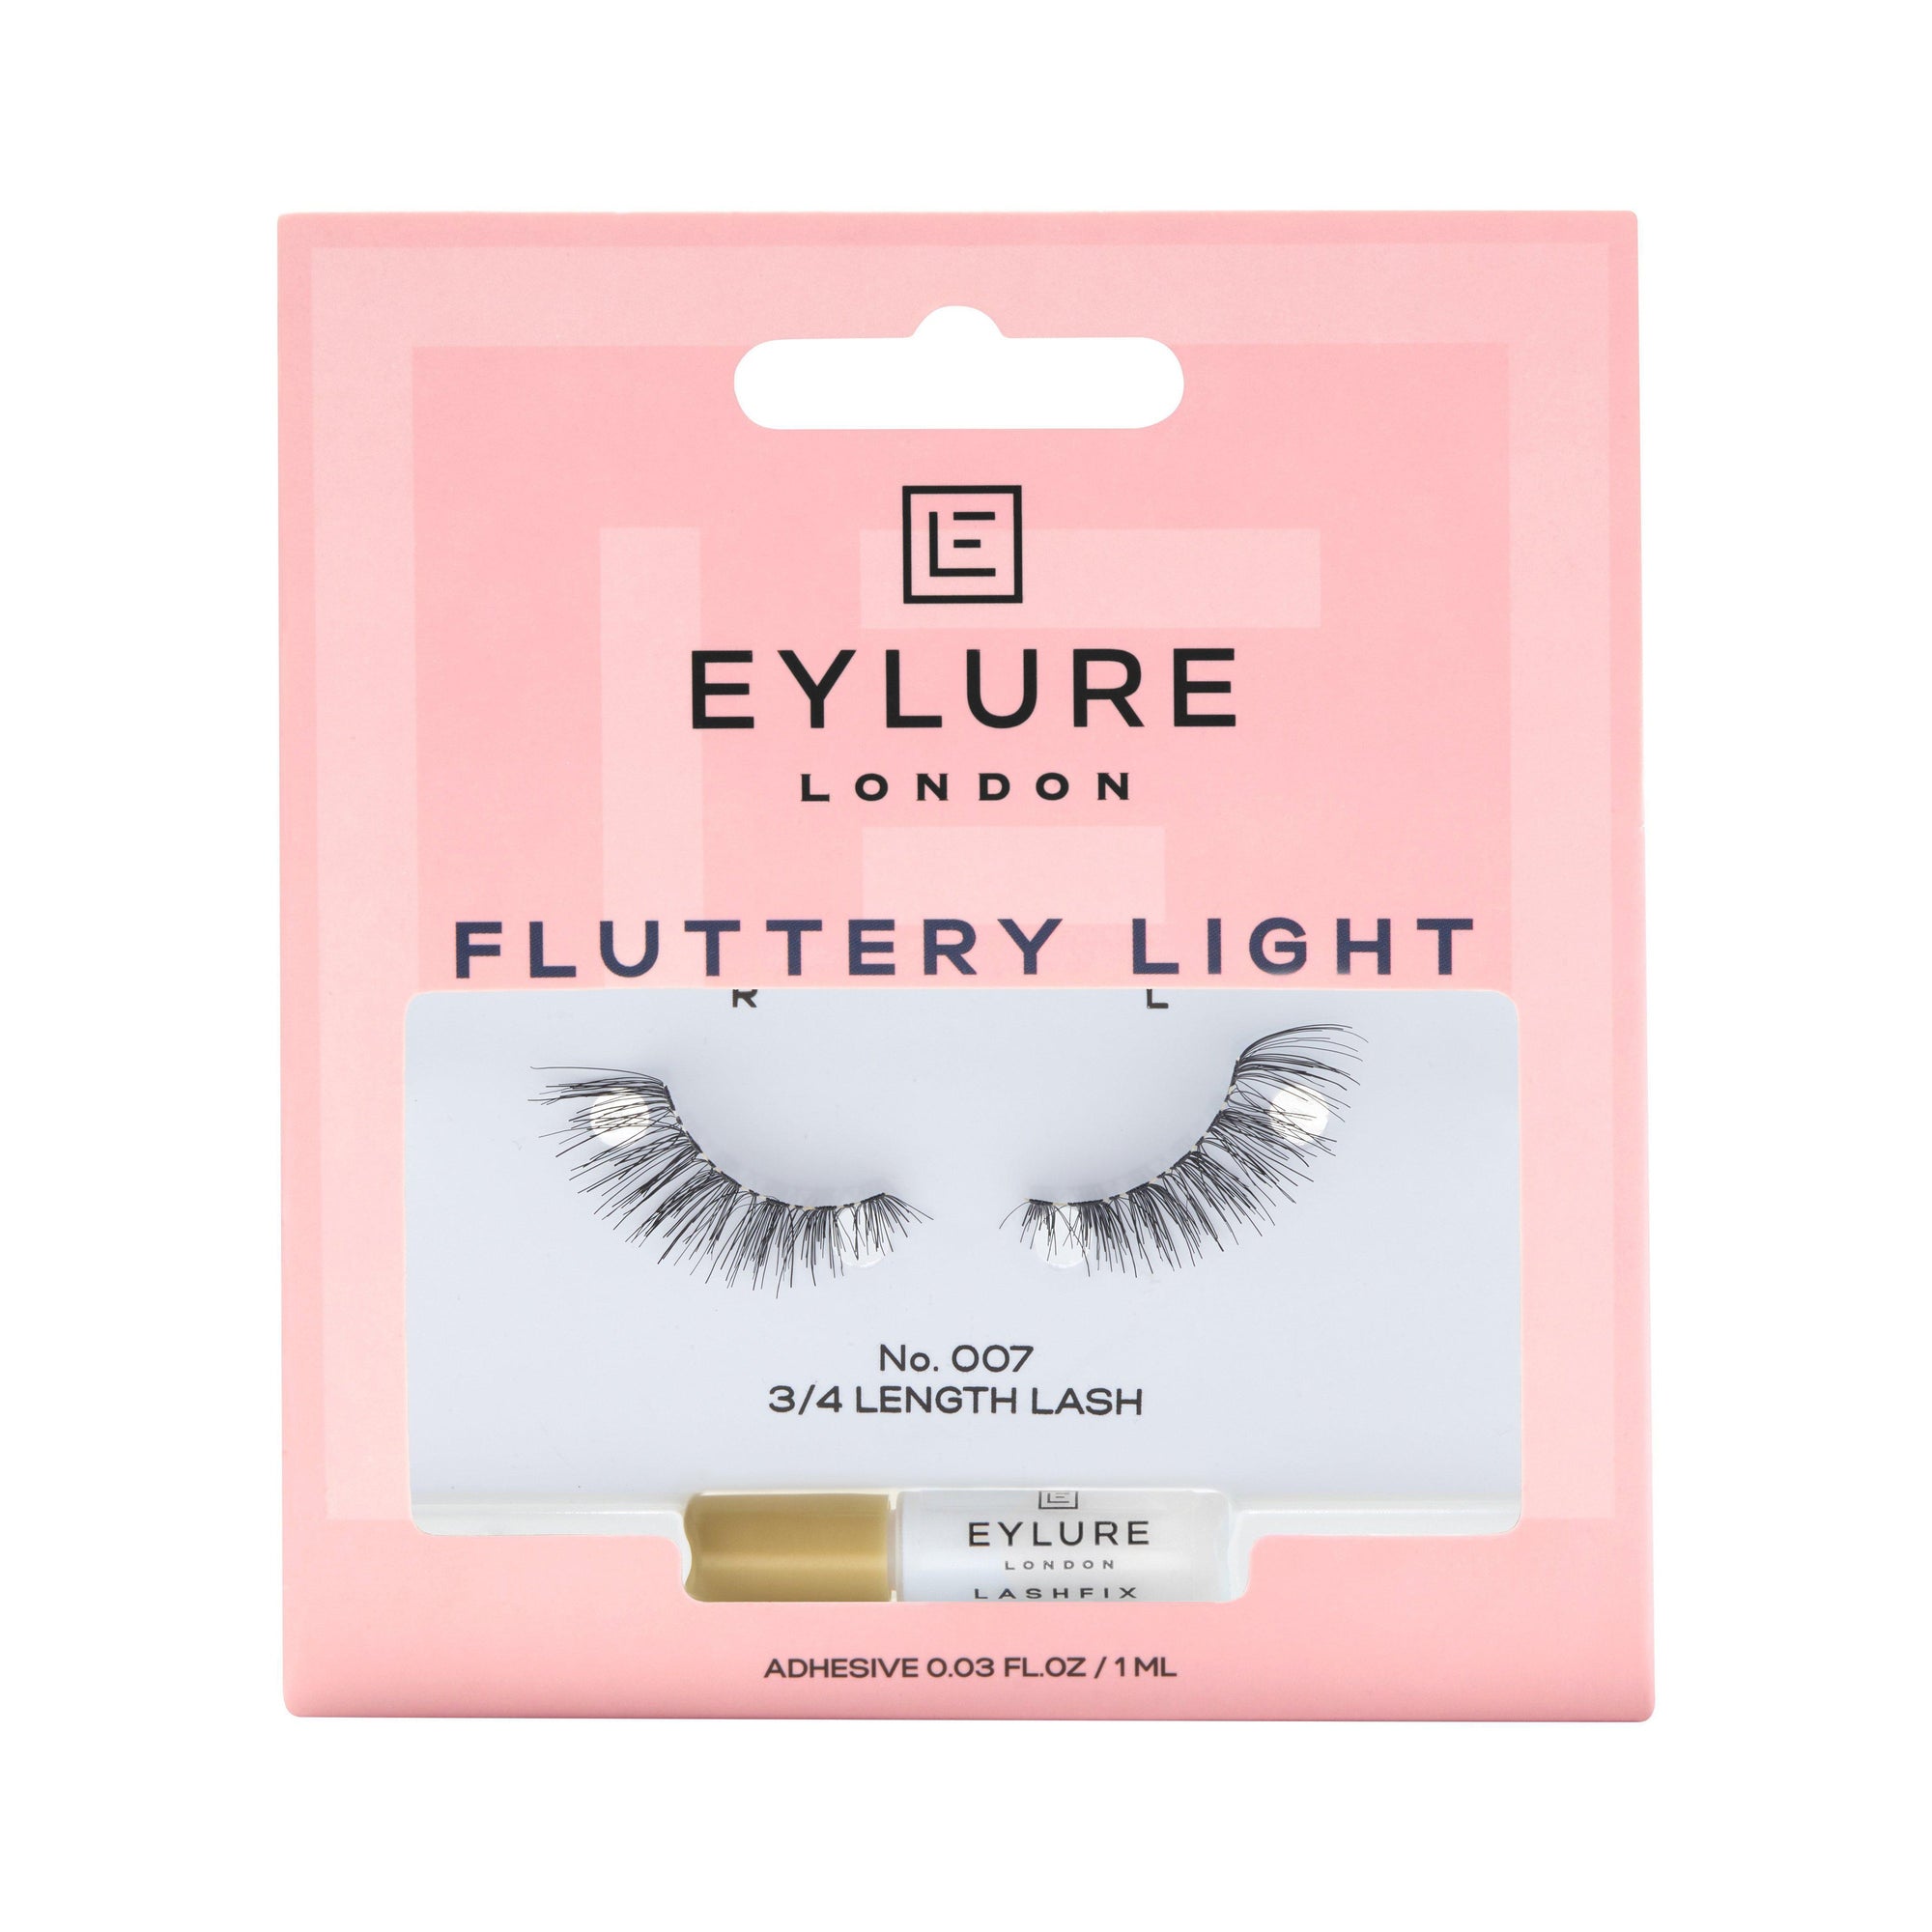 Eylure Fluttery Light #007